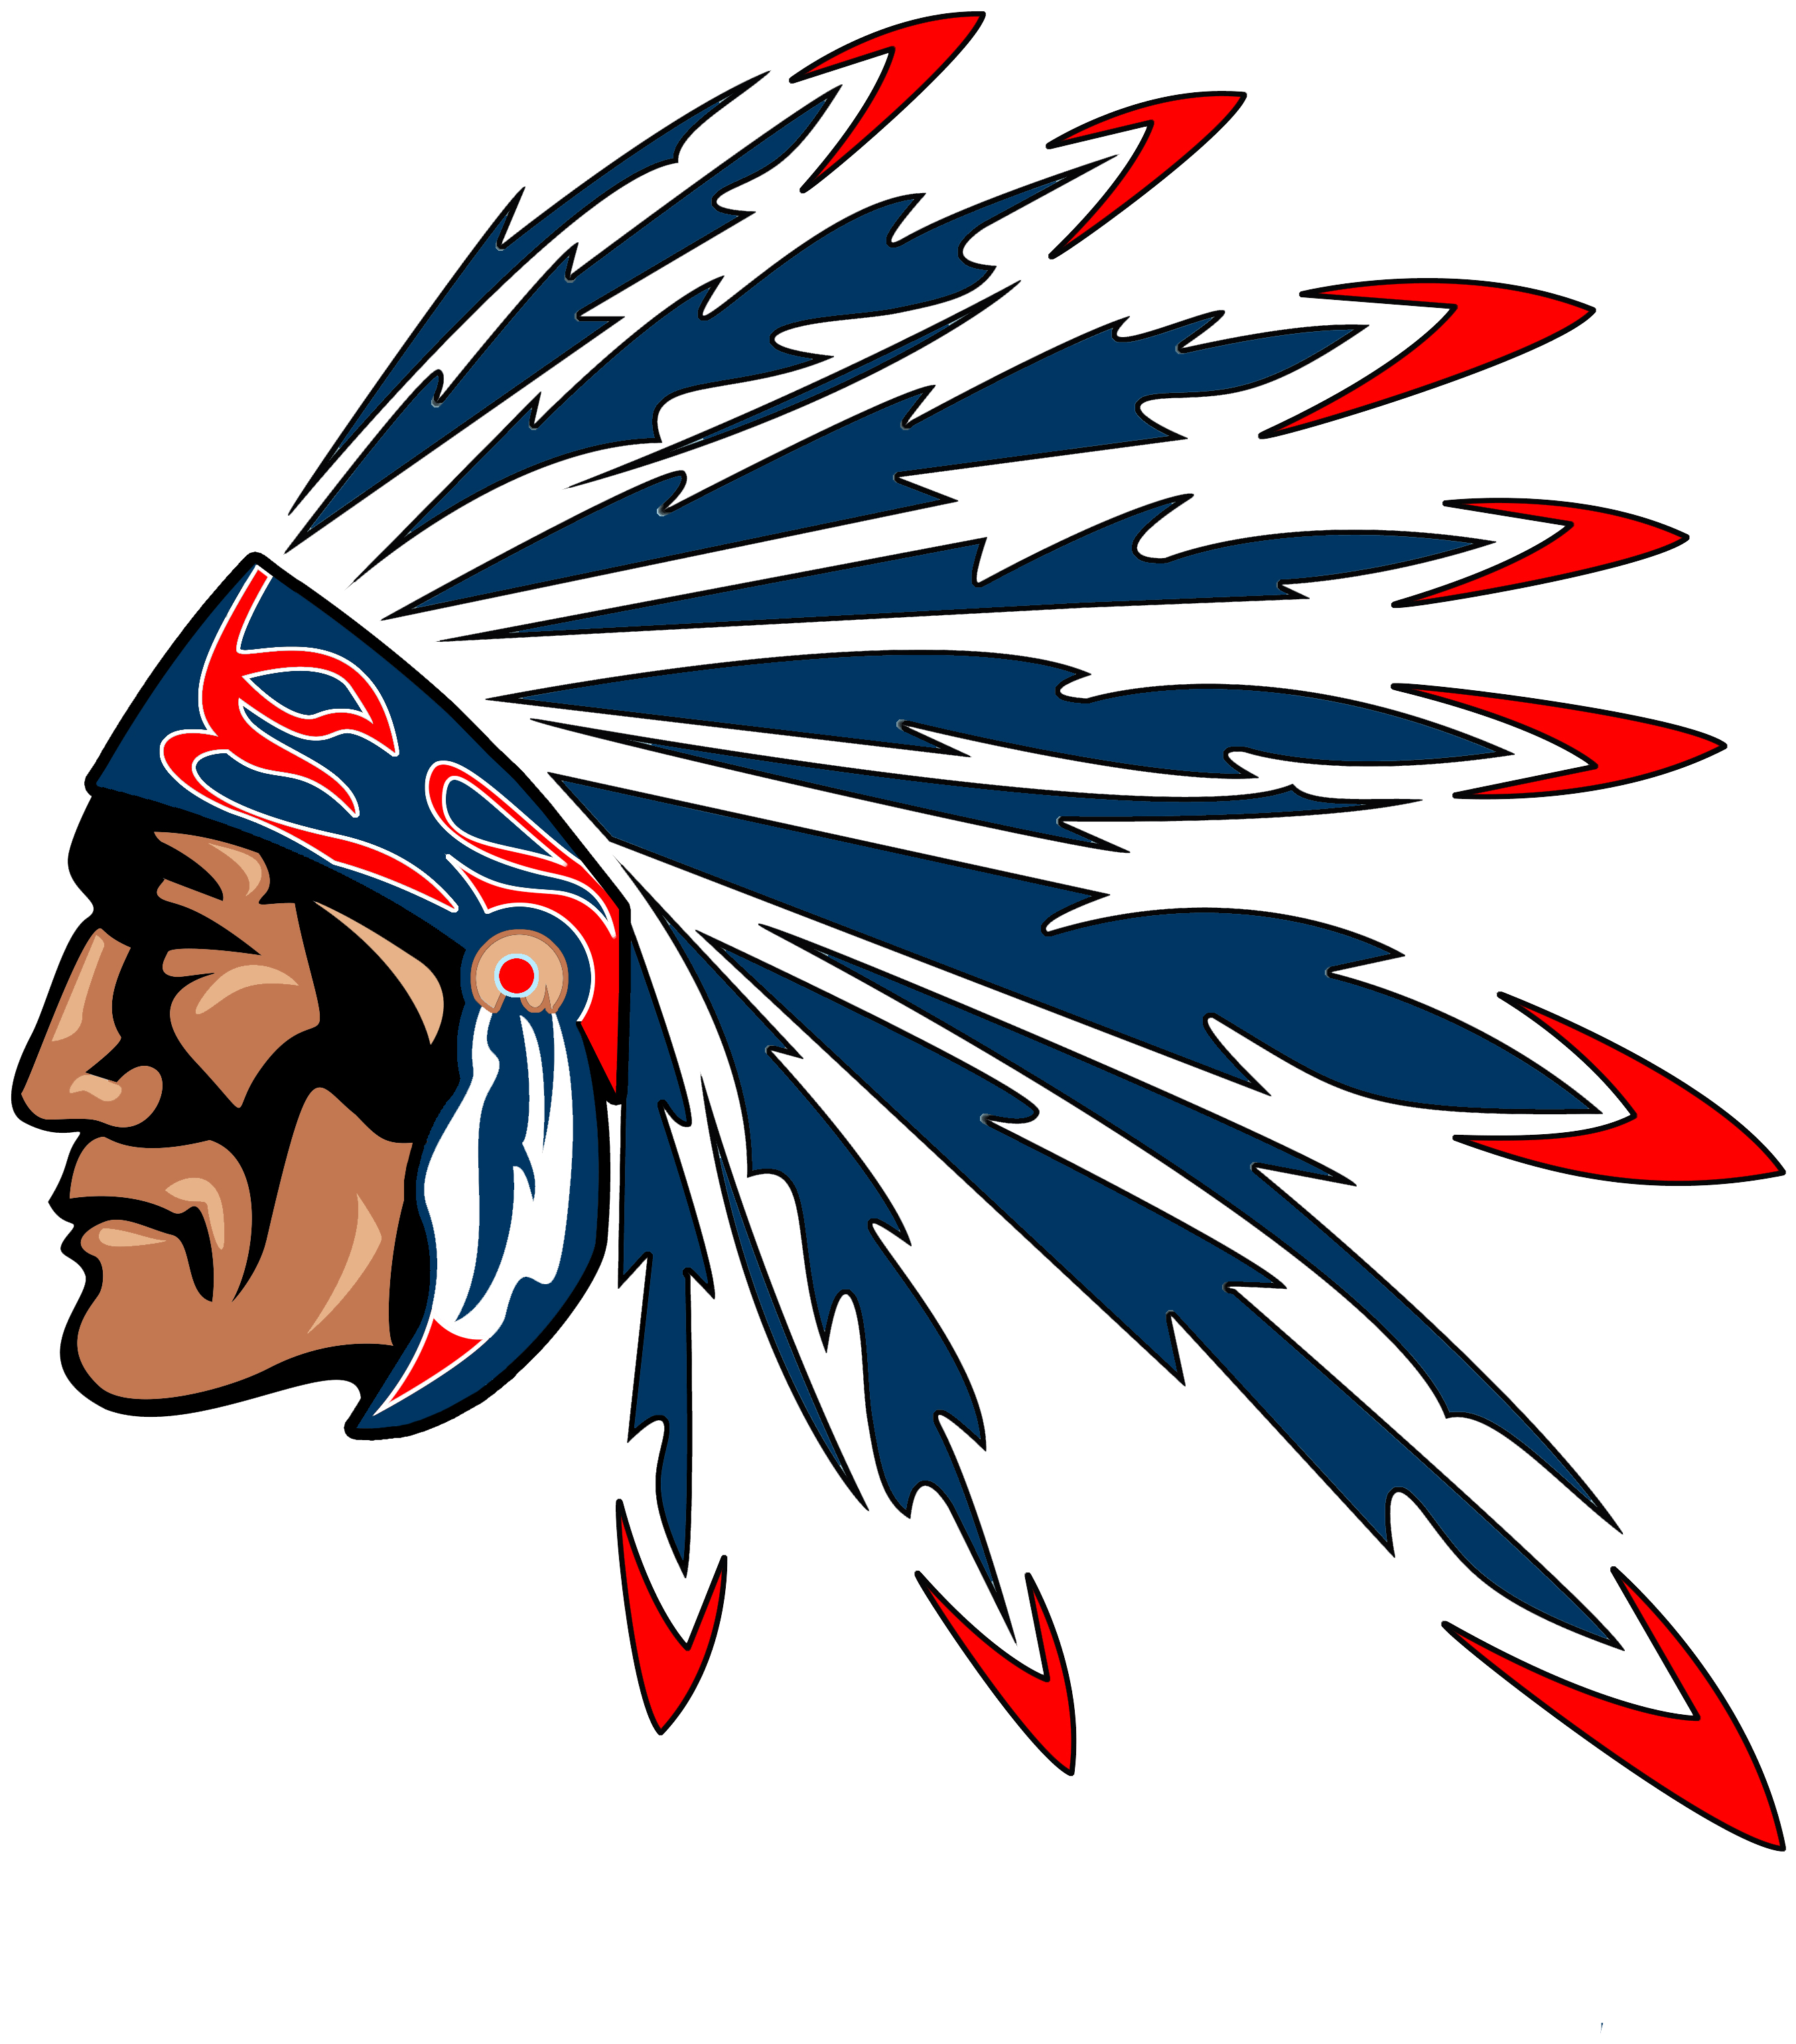 Indians Athletics - Pocatello High School Indians (3513x3513)